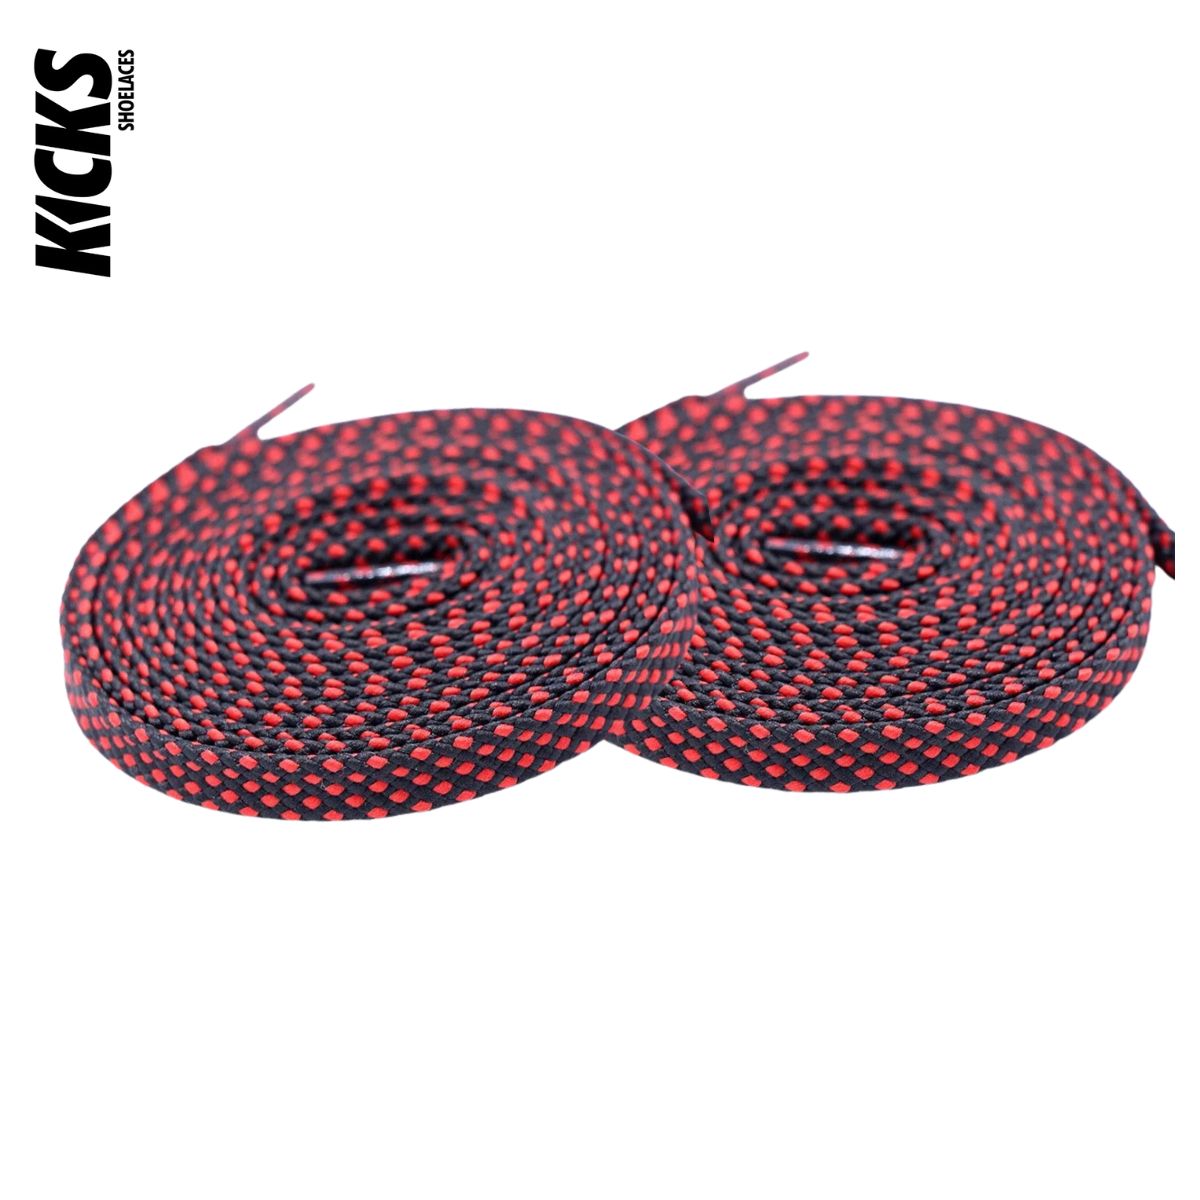 Patterned Shoelaces - Kicks Shoelaces